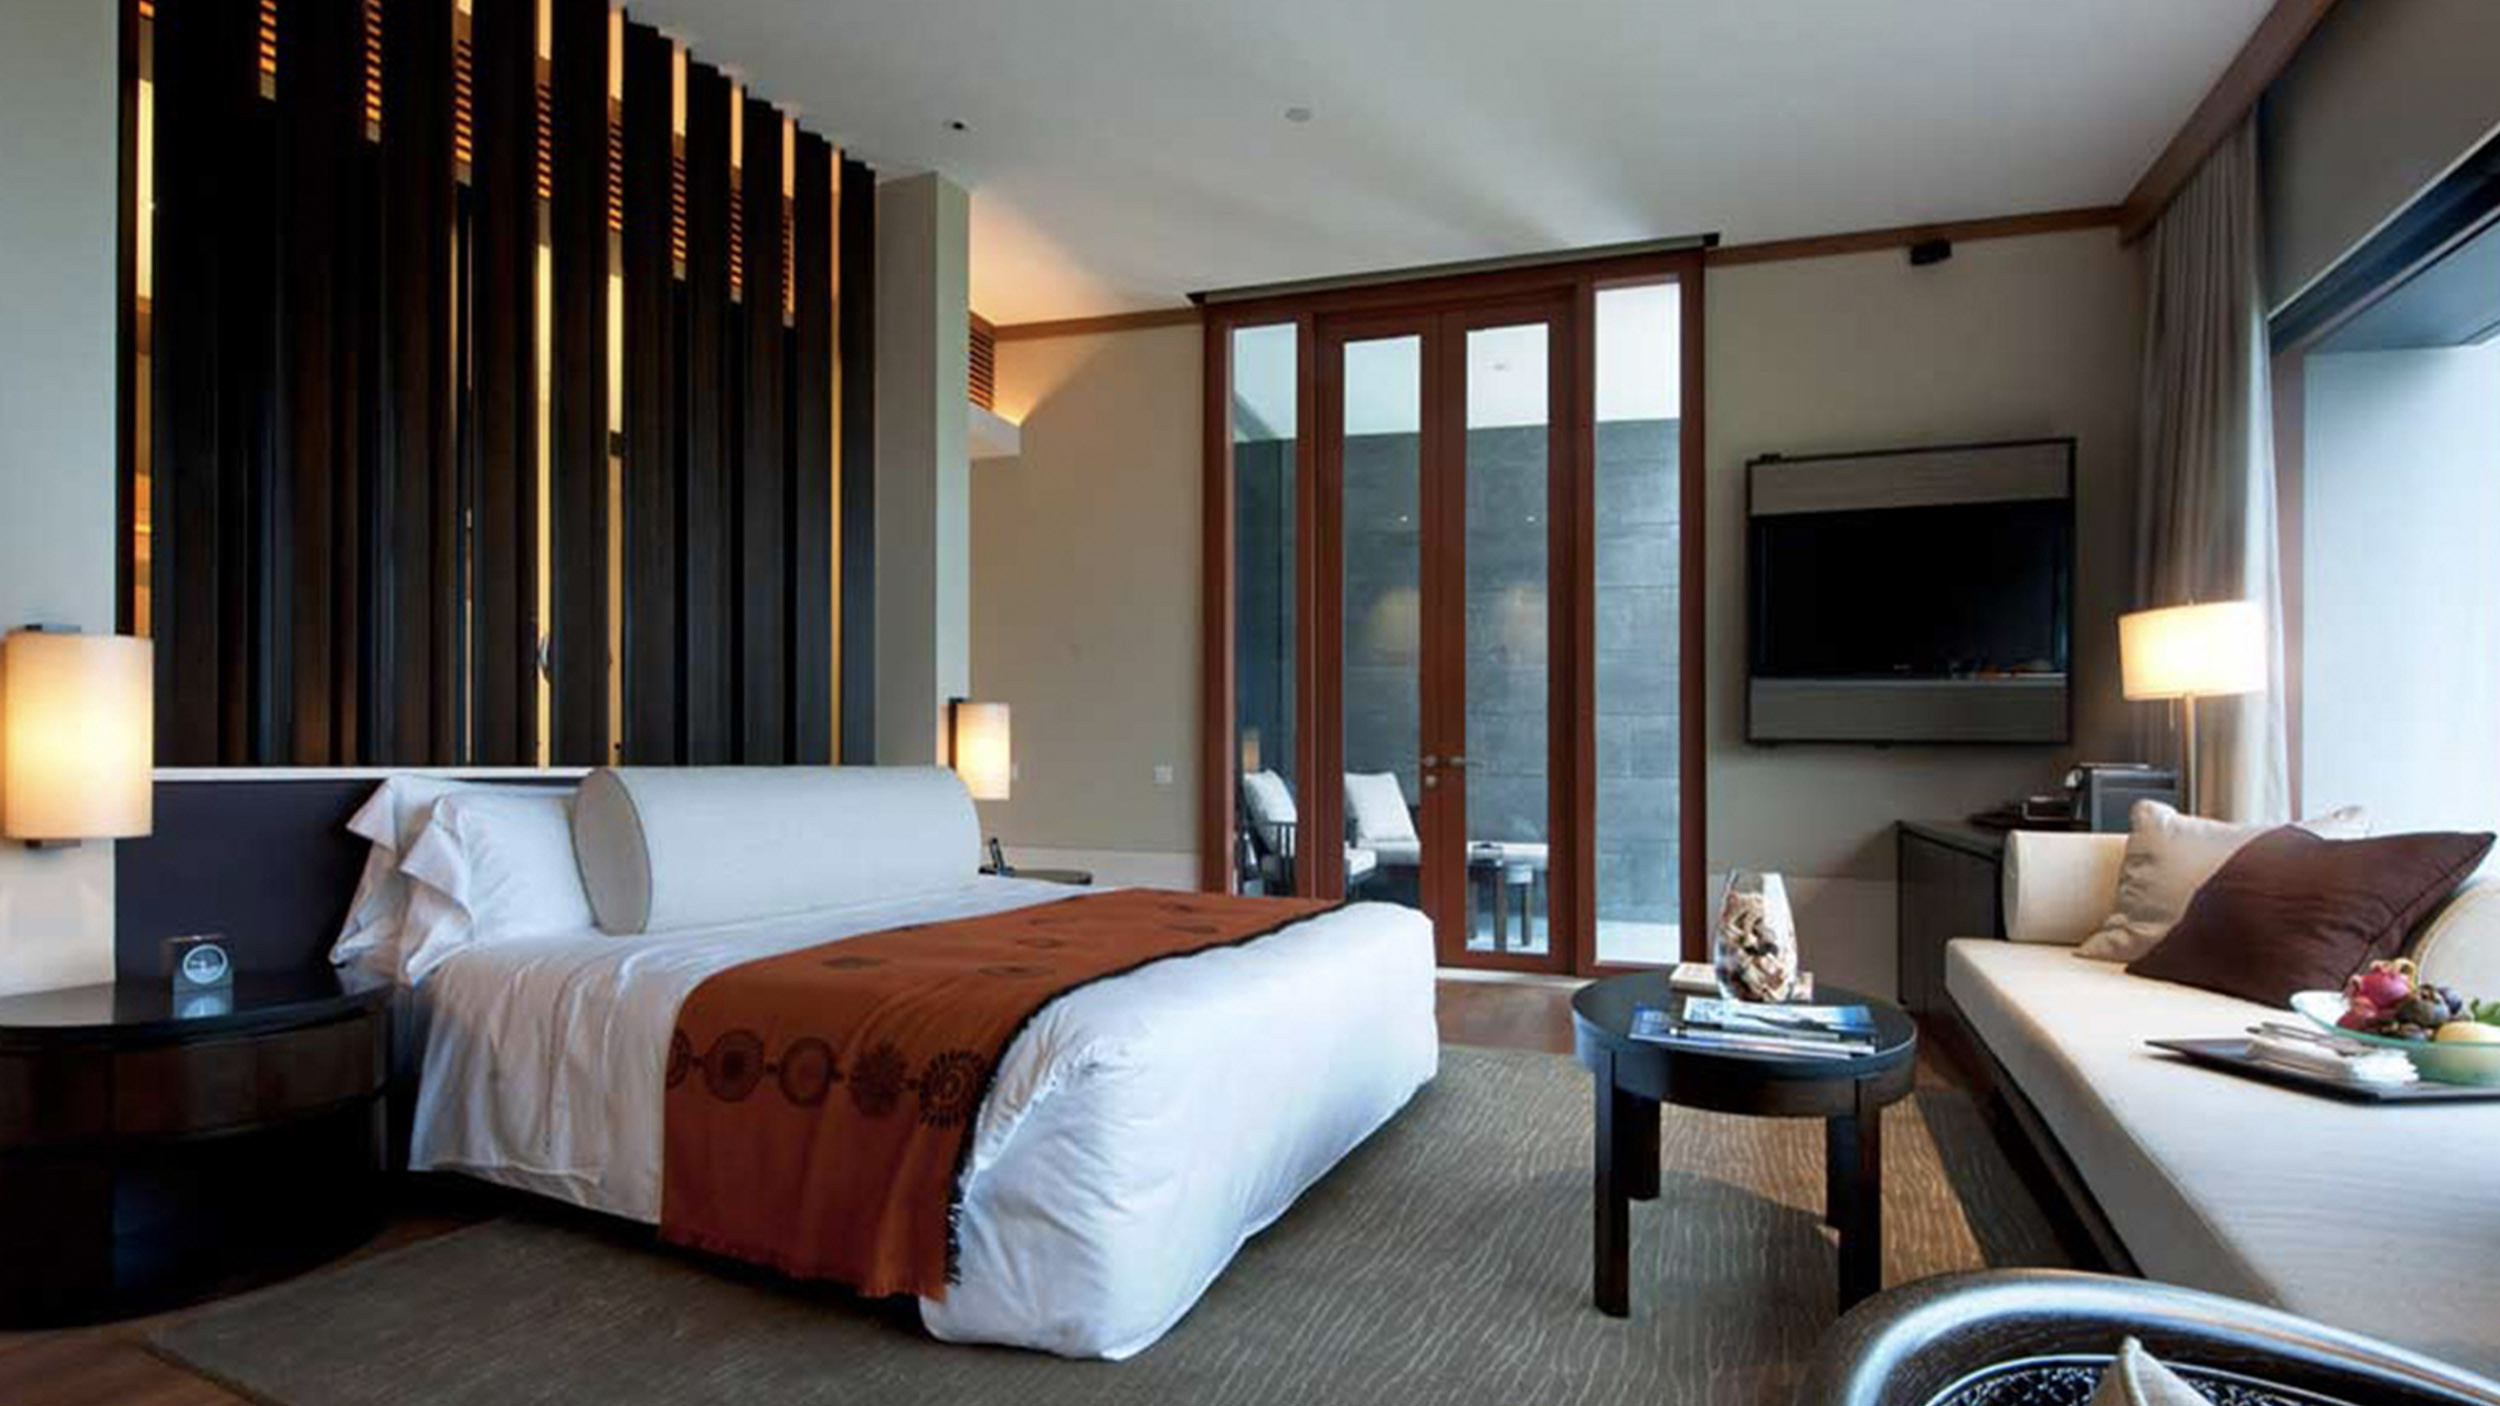 Bedroom interior design at the Capella hotel, Singapore